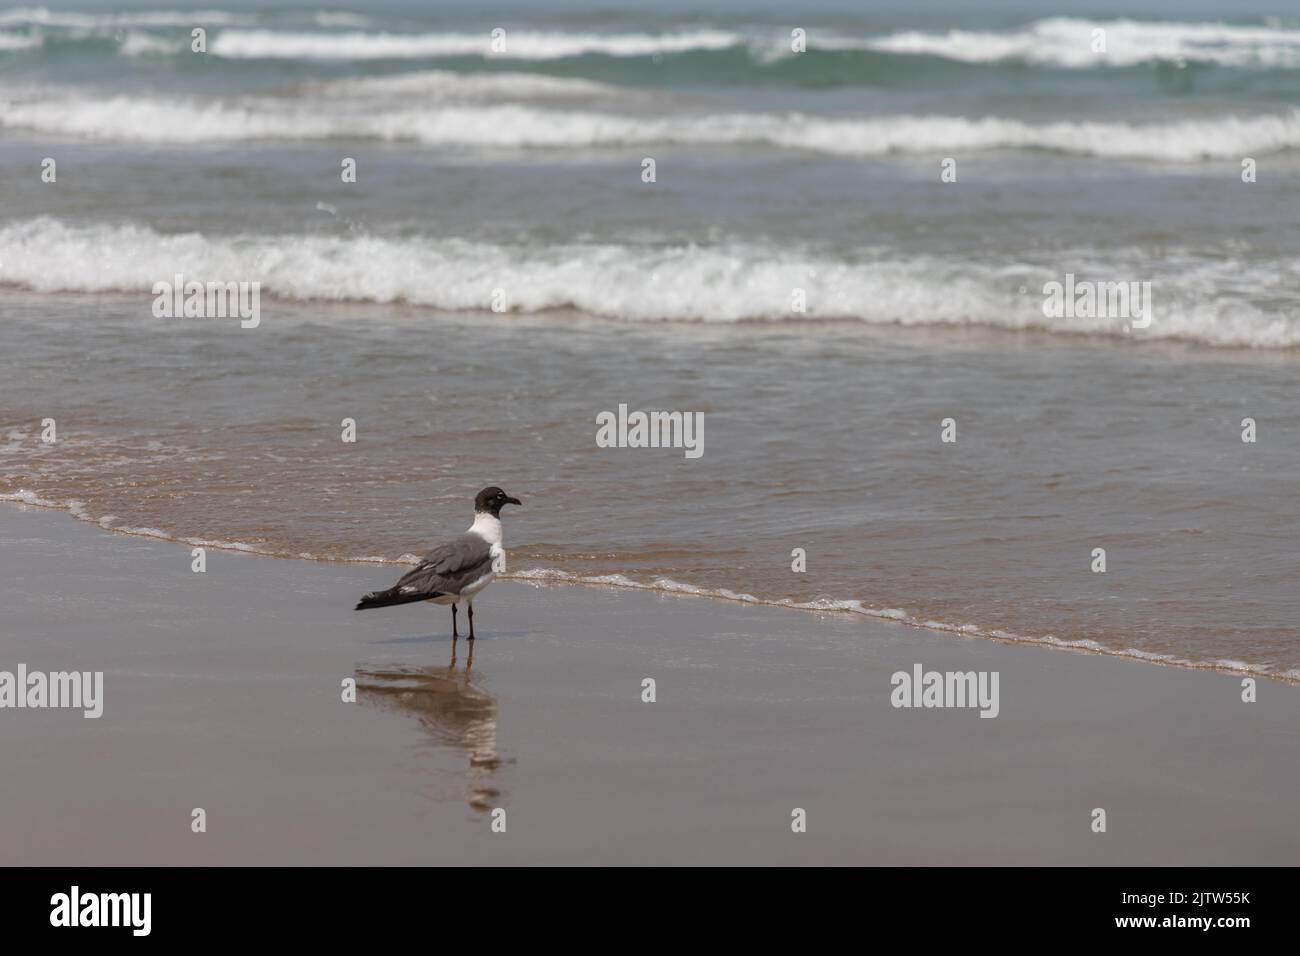 A seagull enjoying the beach at South Padre Island, Texas Stock Photo